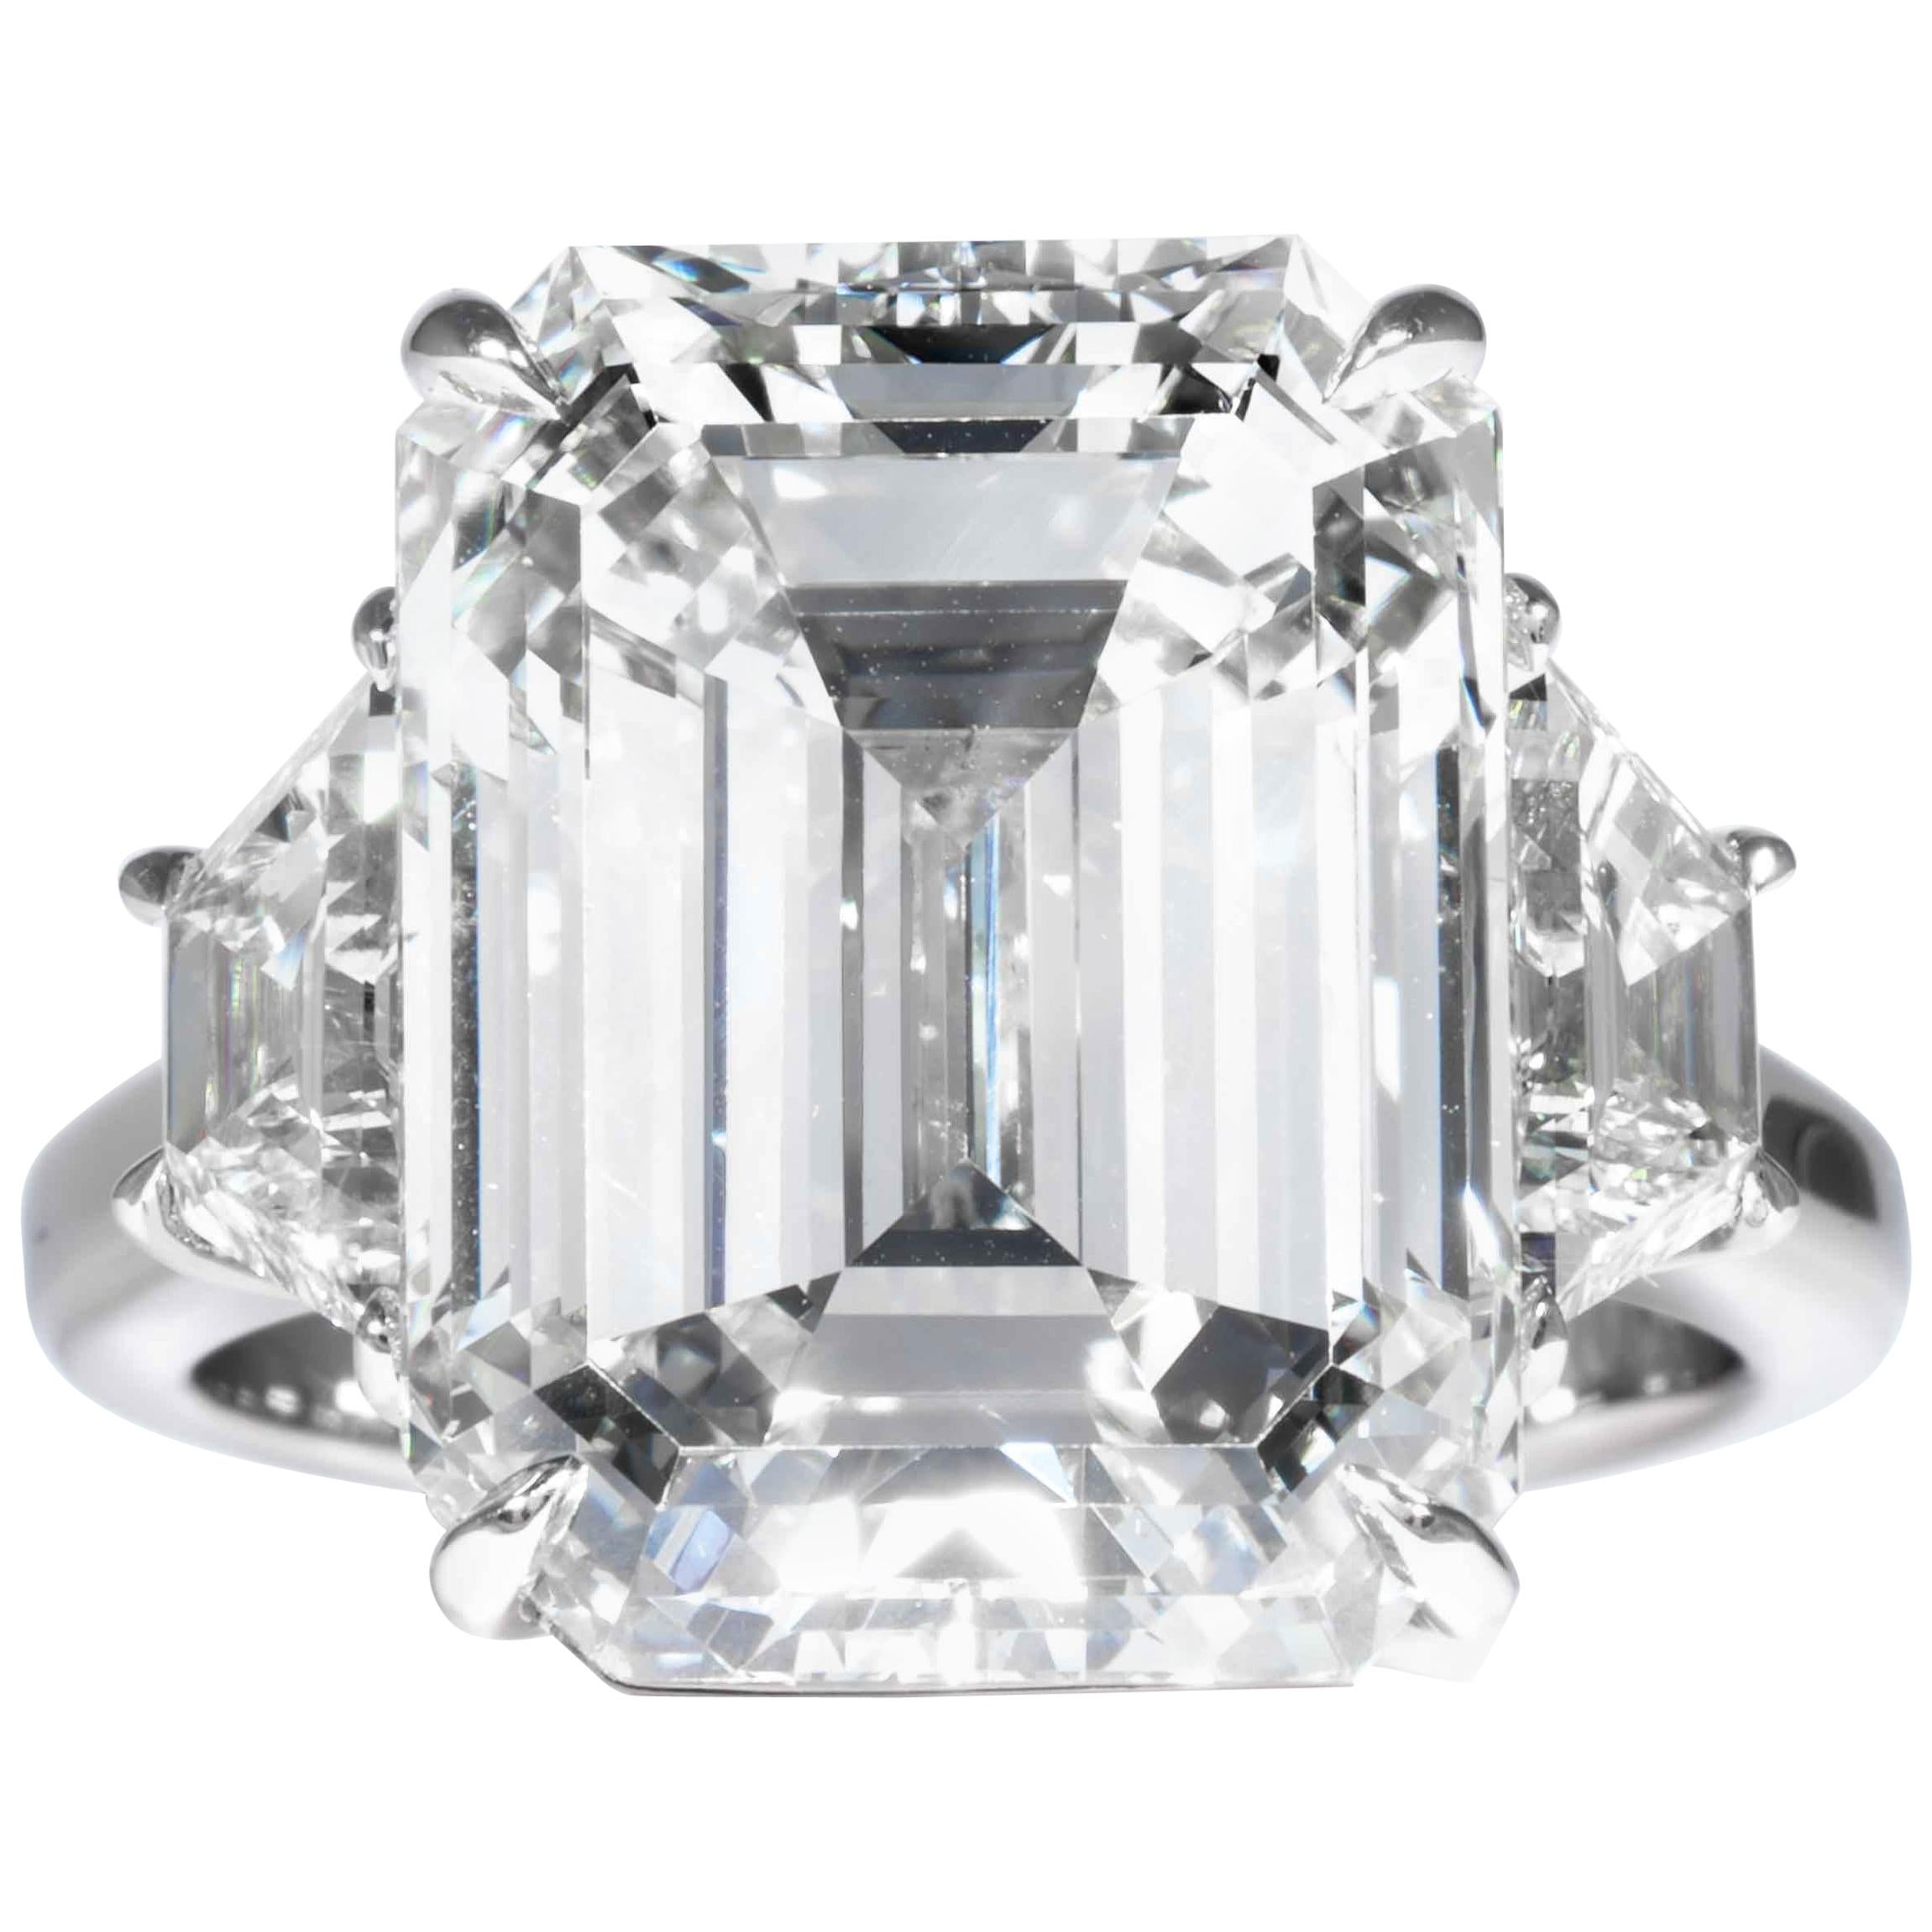 Shreve, Crump & Low GIA Certified 13.26 Carat K VS2 Emerald Cut Diamond Ring